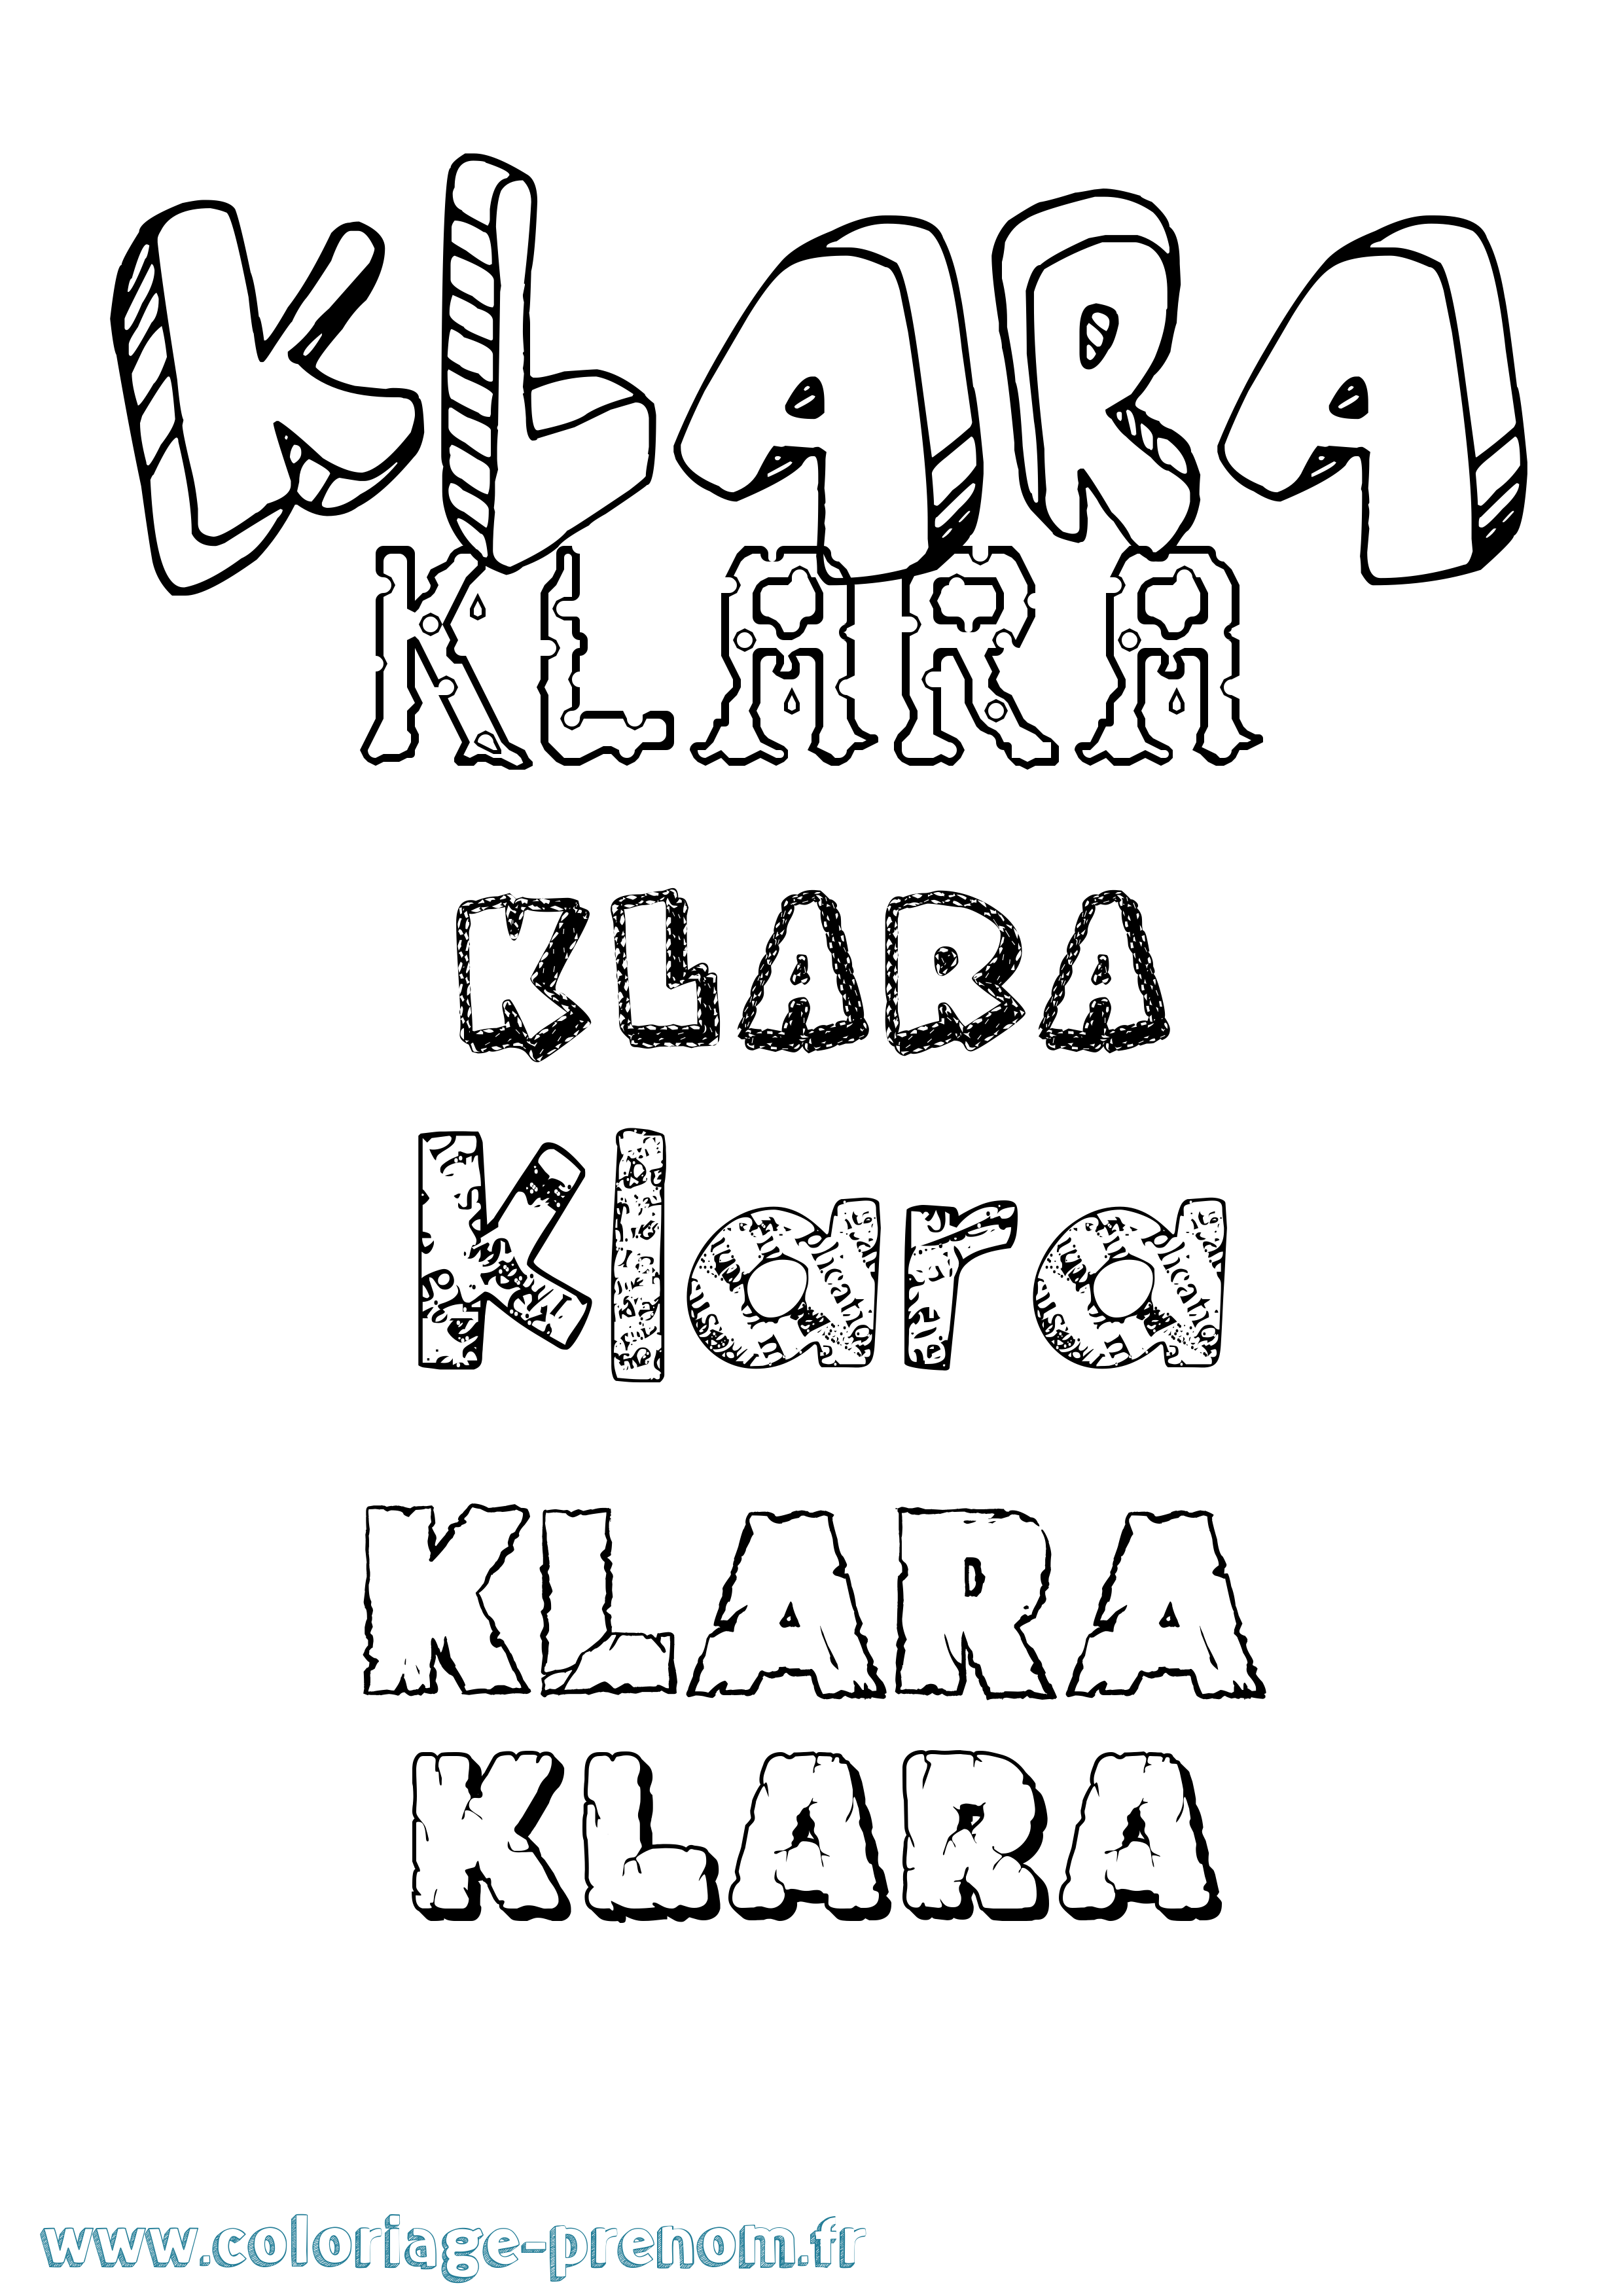 Coloriage prénom Klara Destructuré